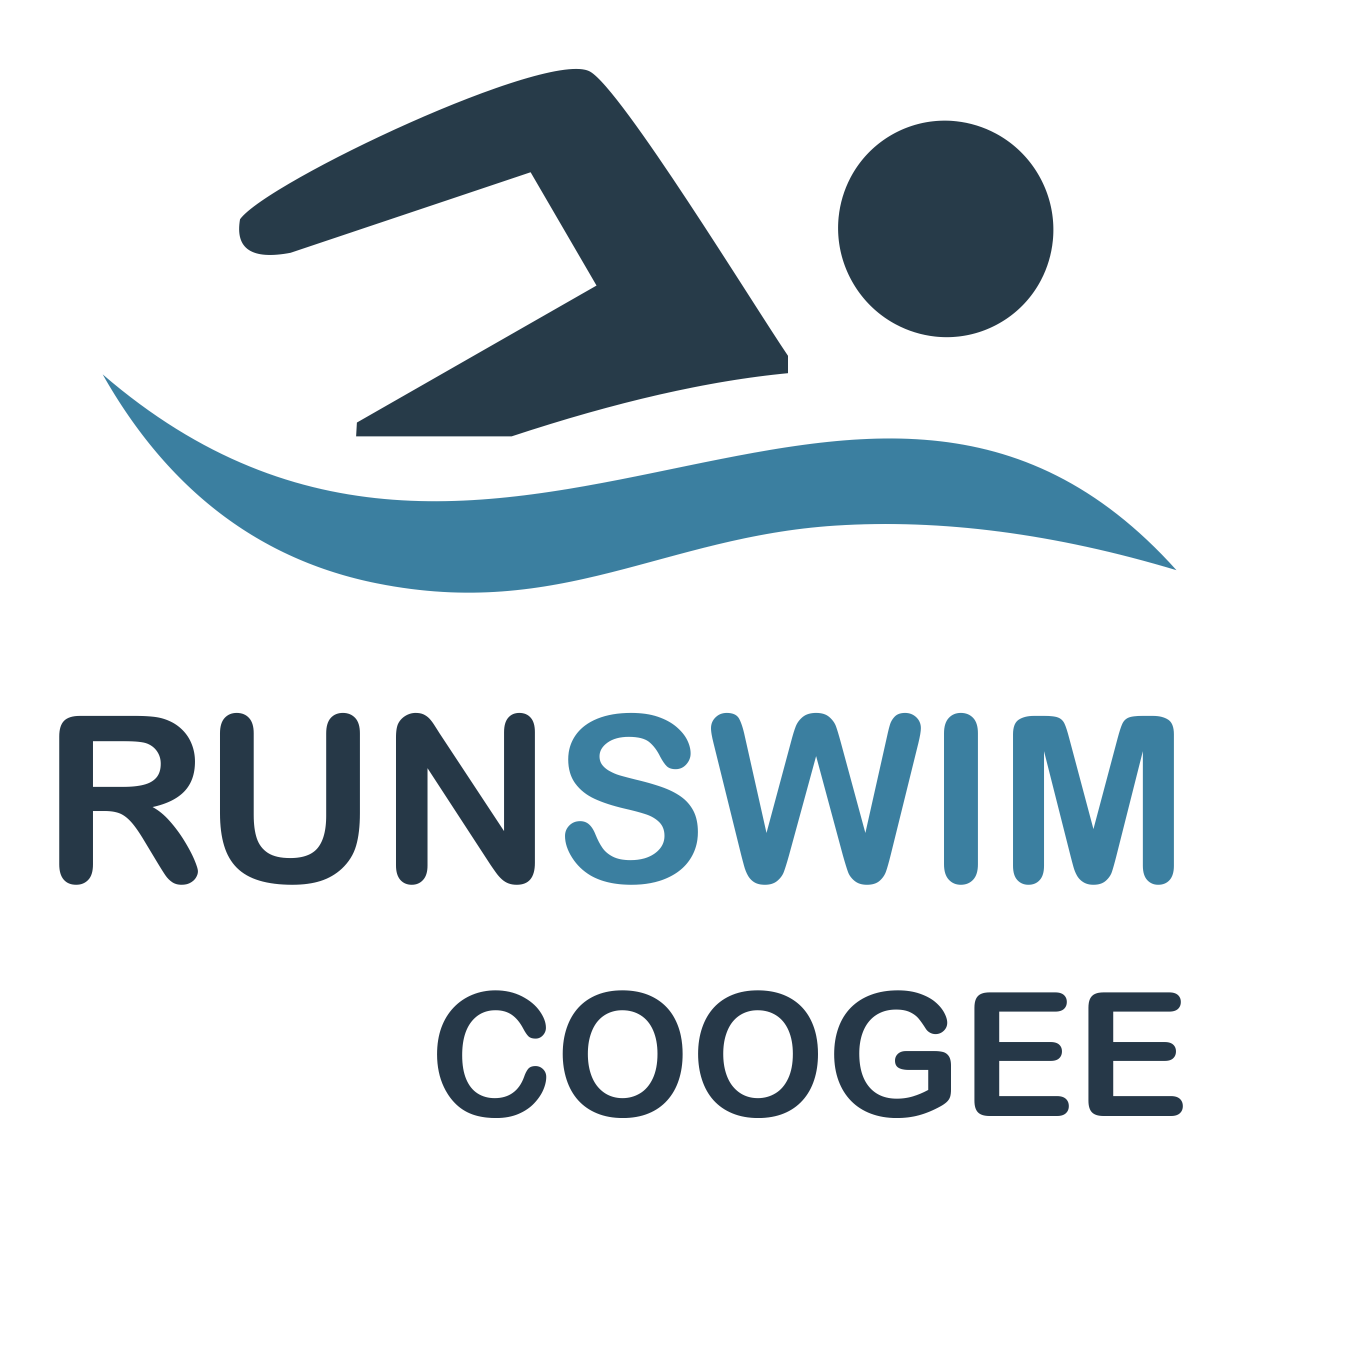 RunSwim Coogee Aquathlon Logo